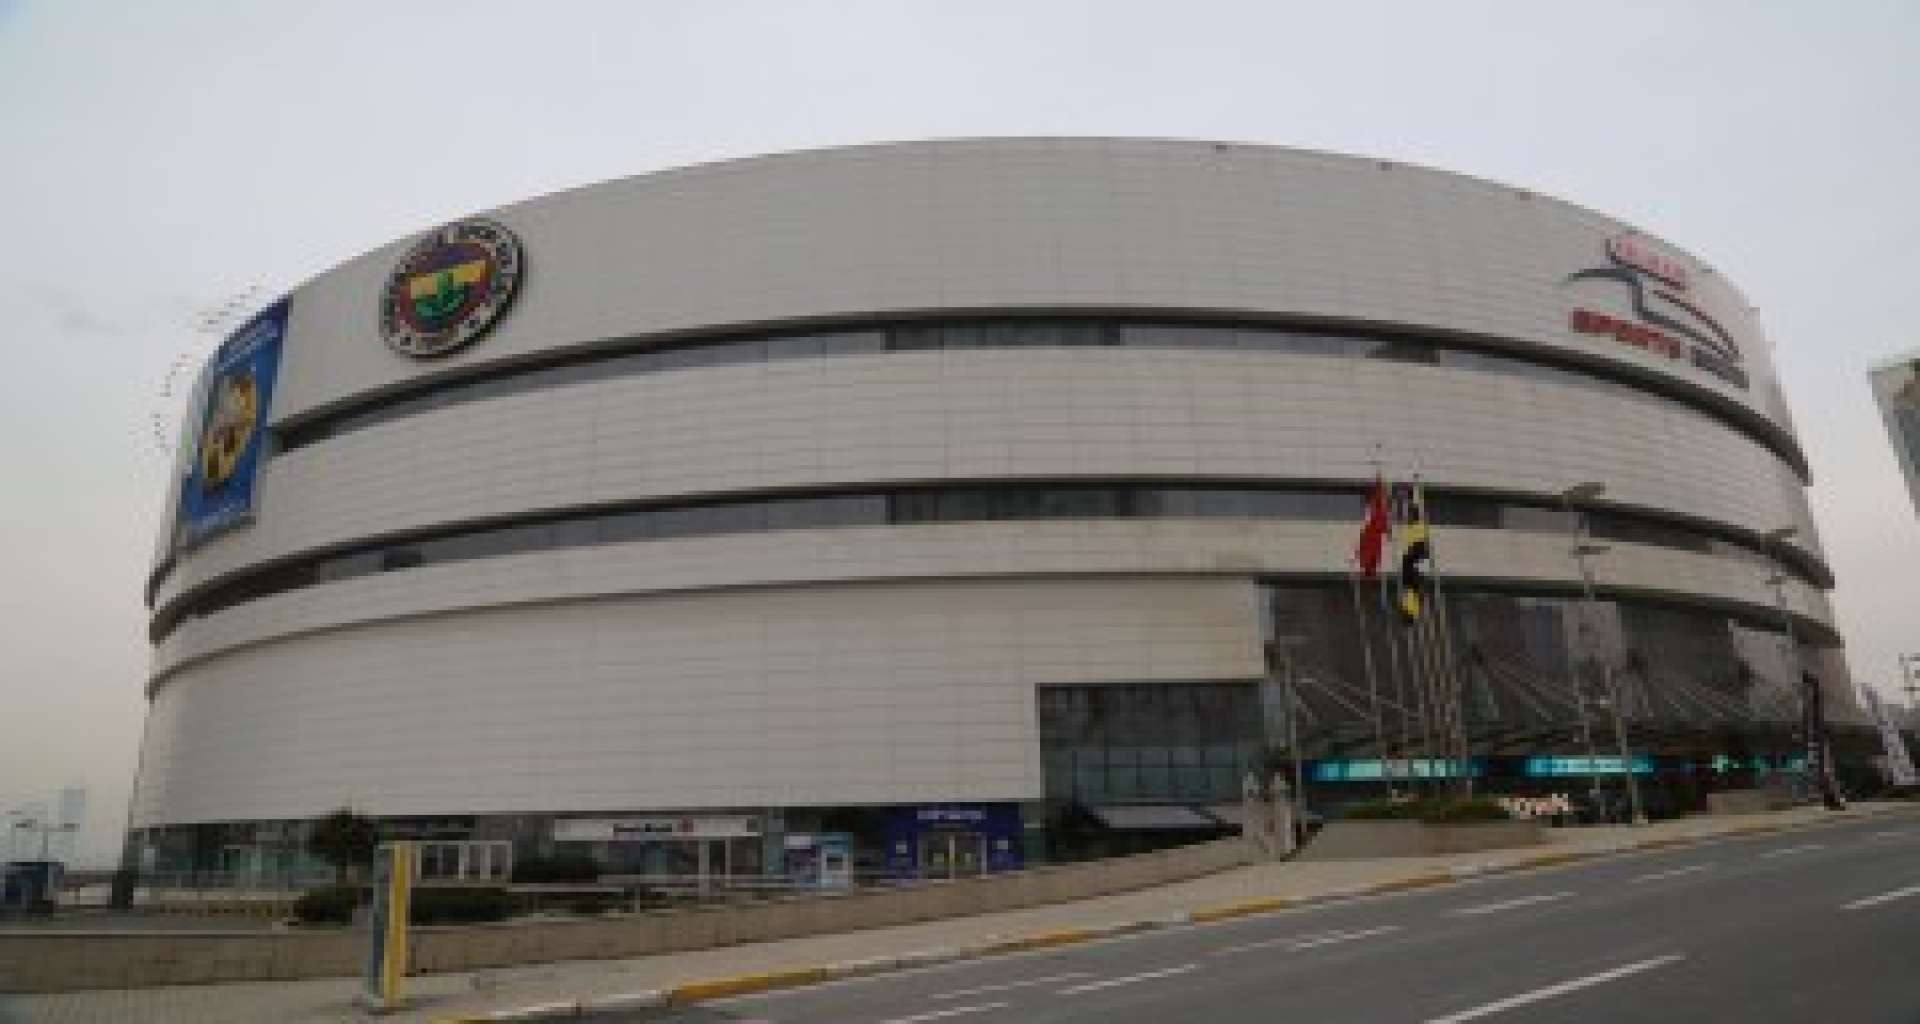 Fenerbahçe Ülker Sports Arena